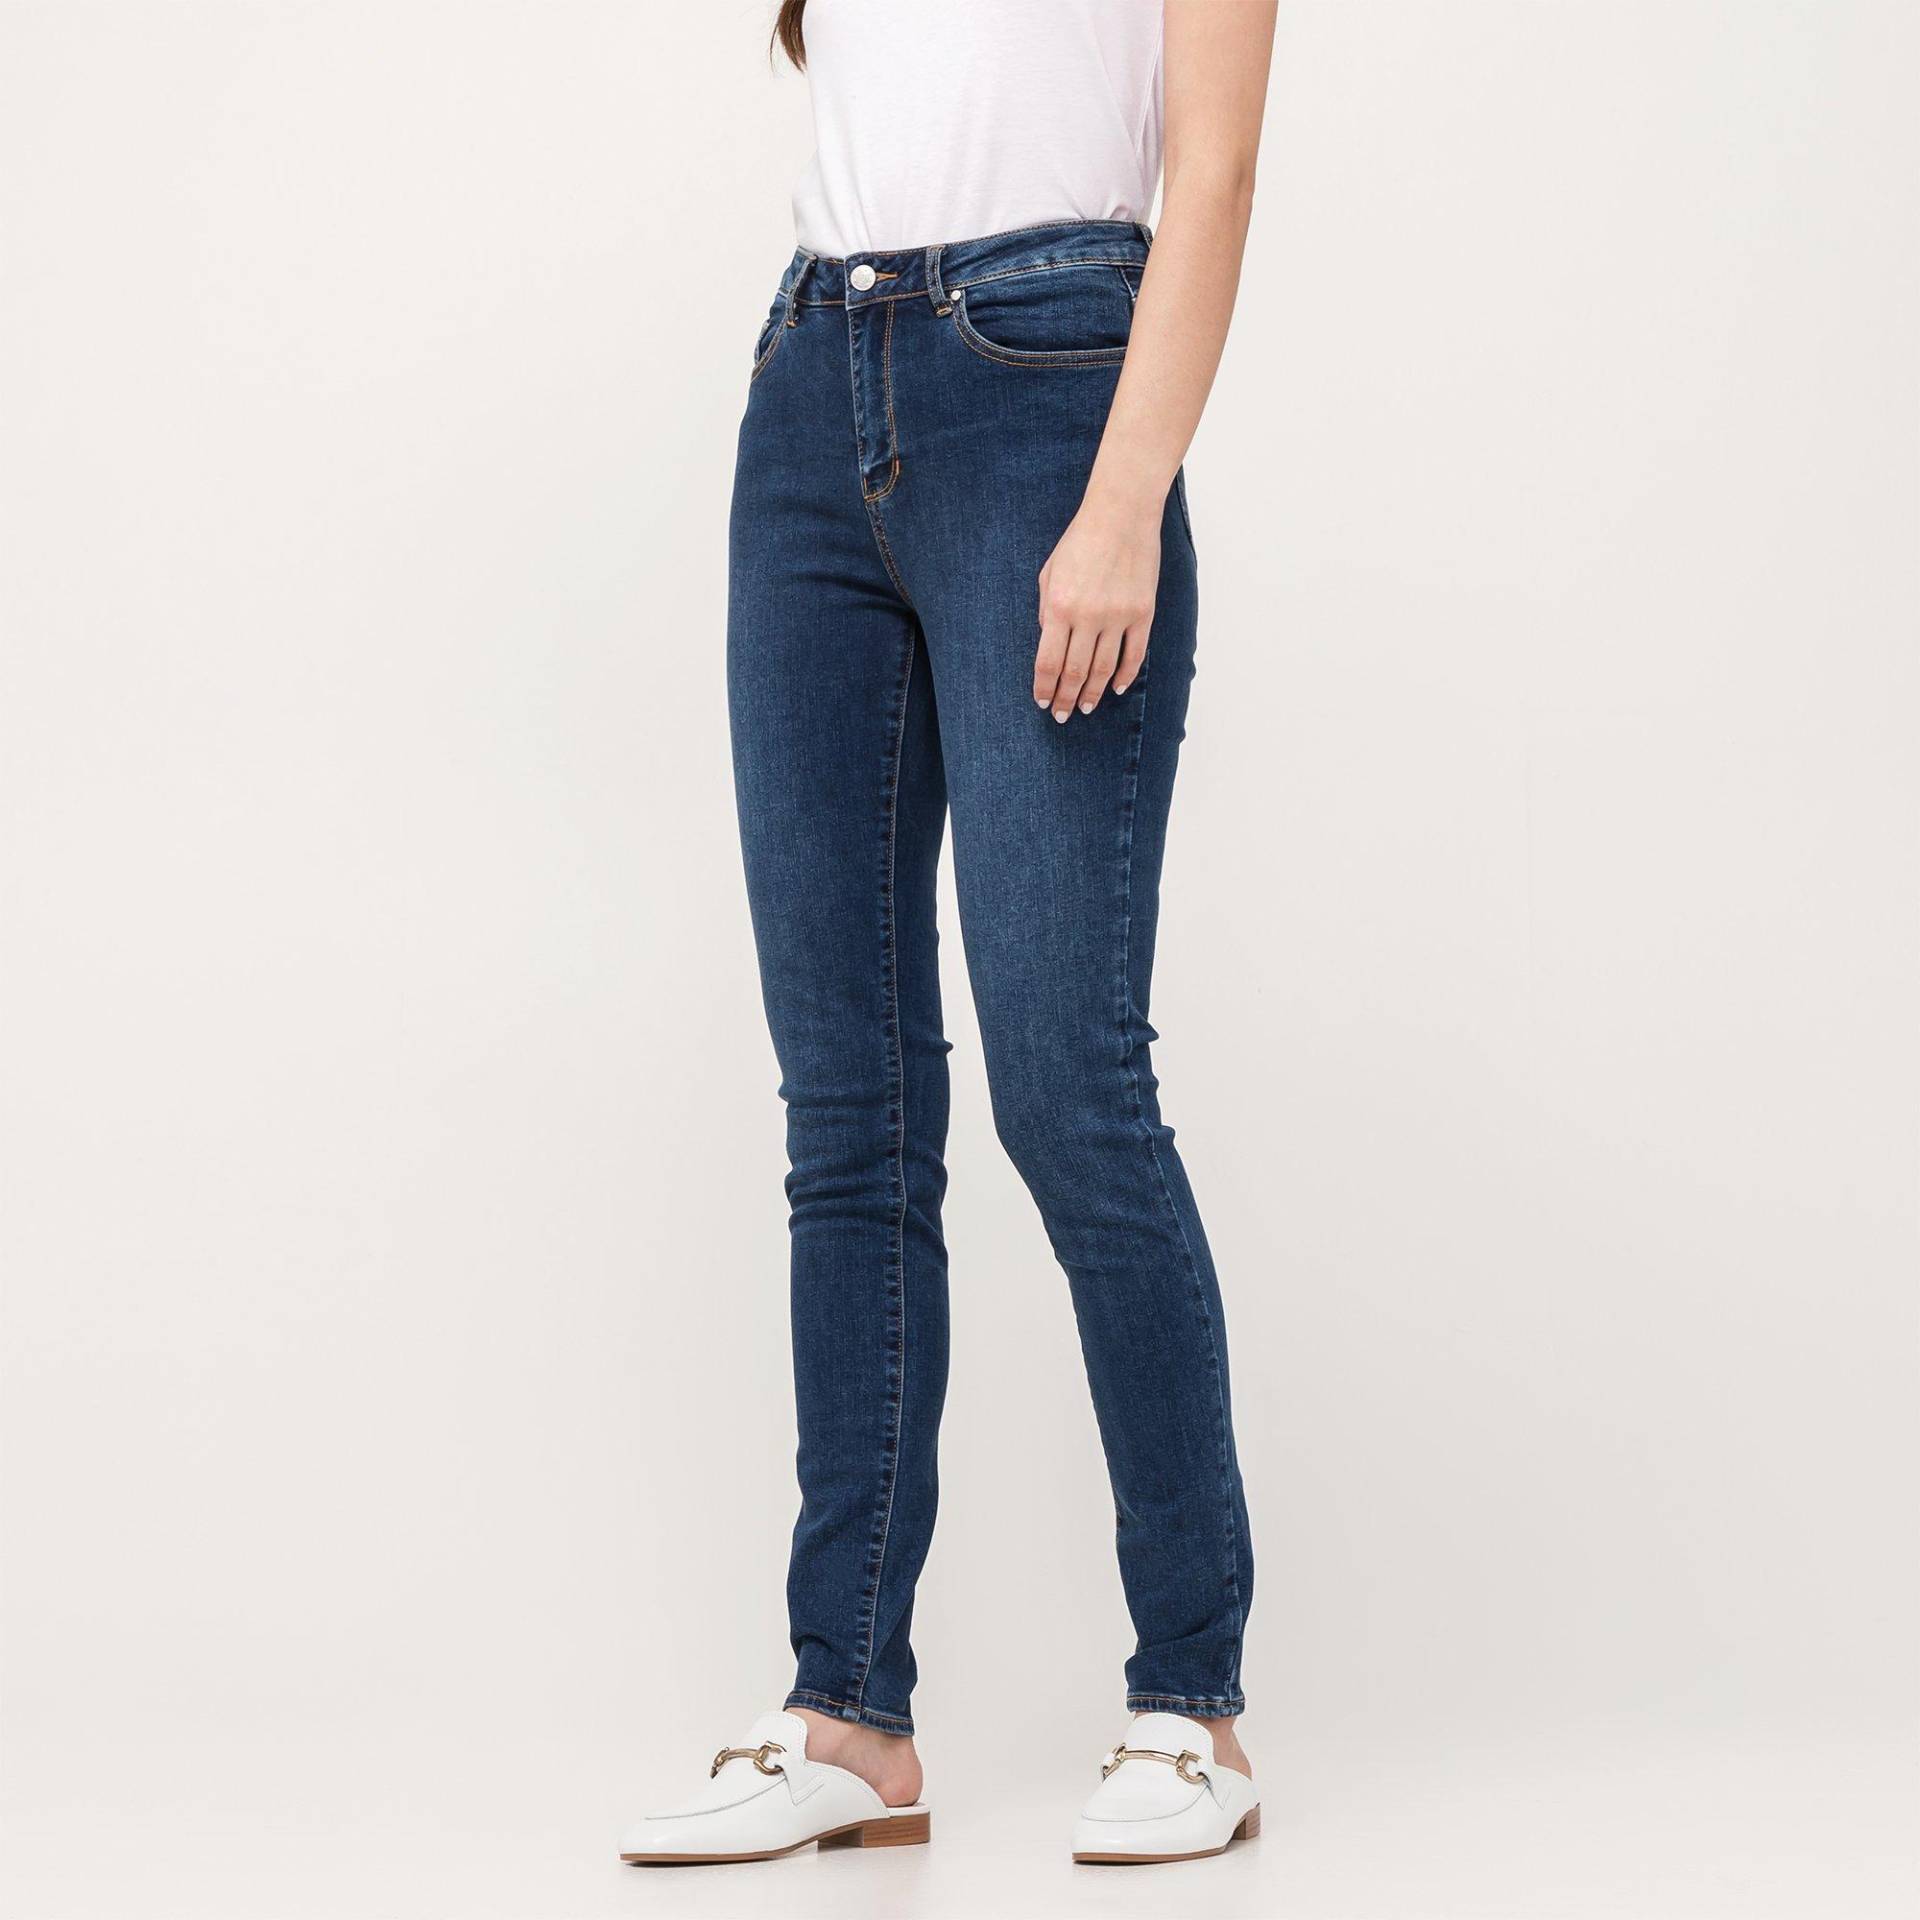 Jeans, Slim Fit Damen Blau Denim L30/W36 von Manor Woman